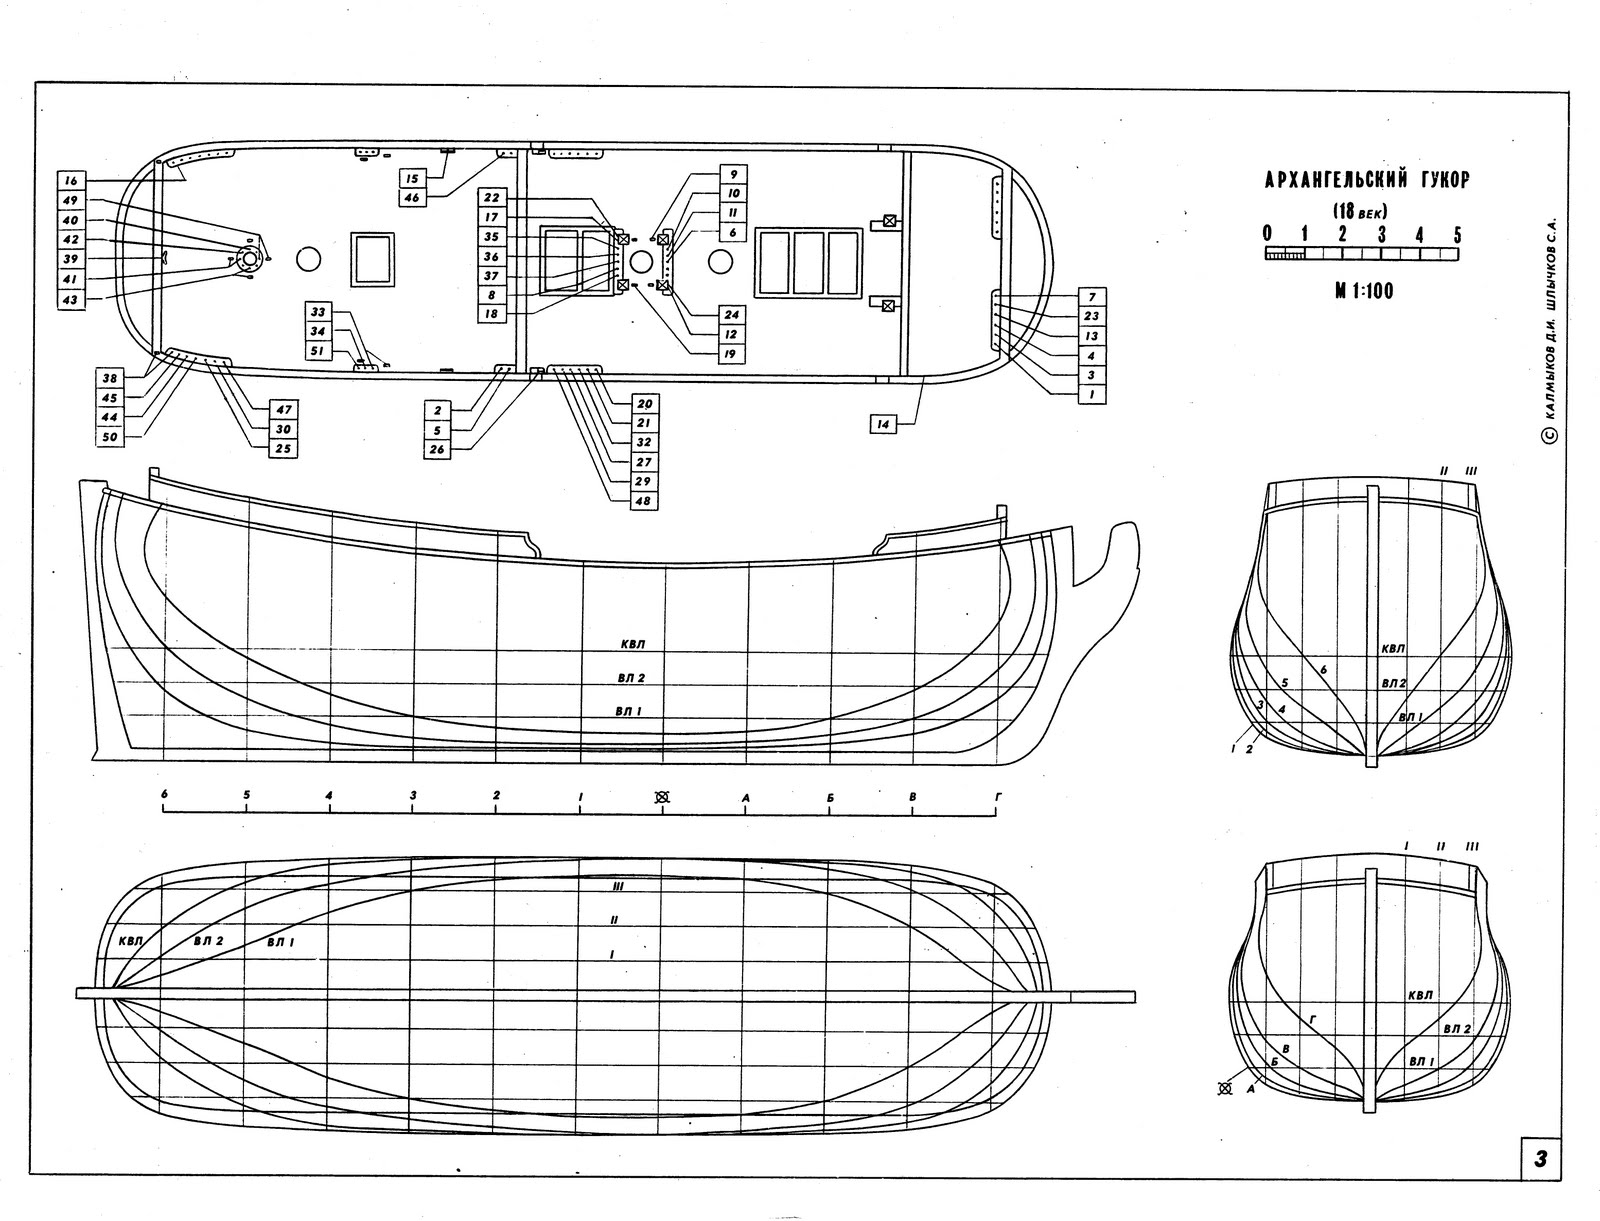 Free Wooden Ship Model Plans